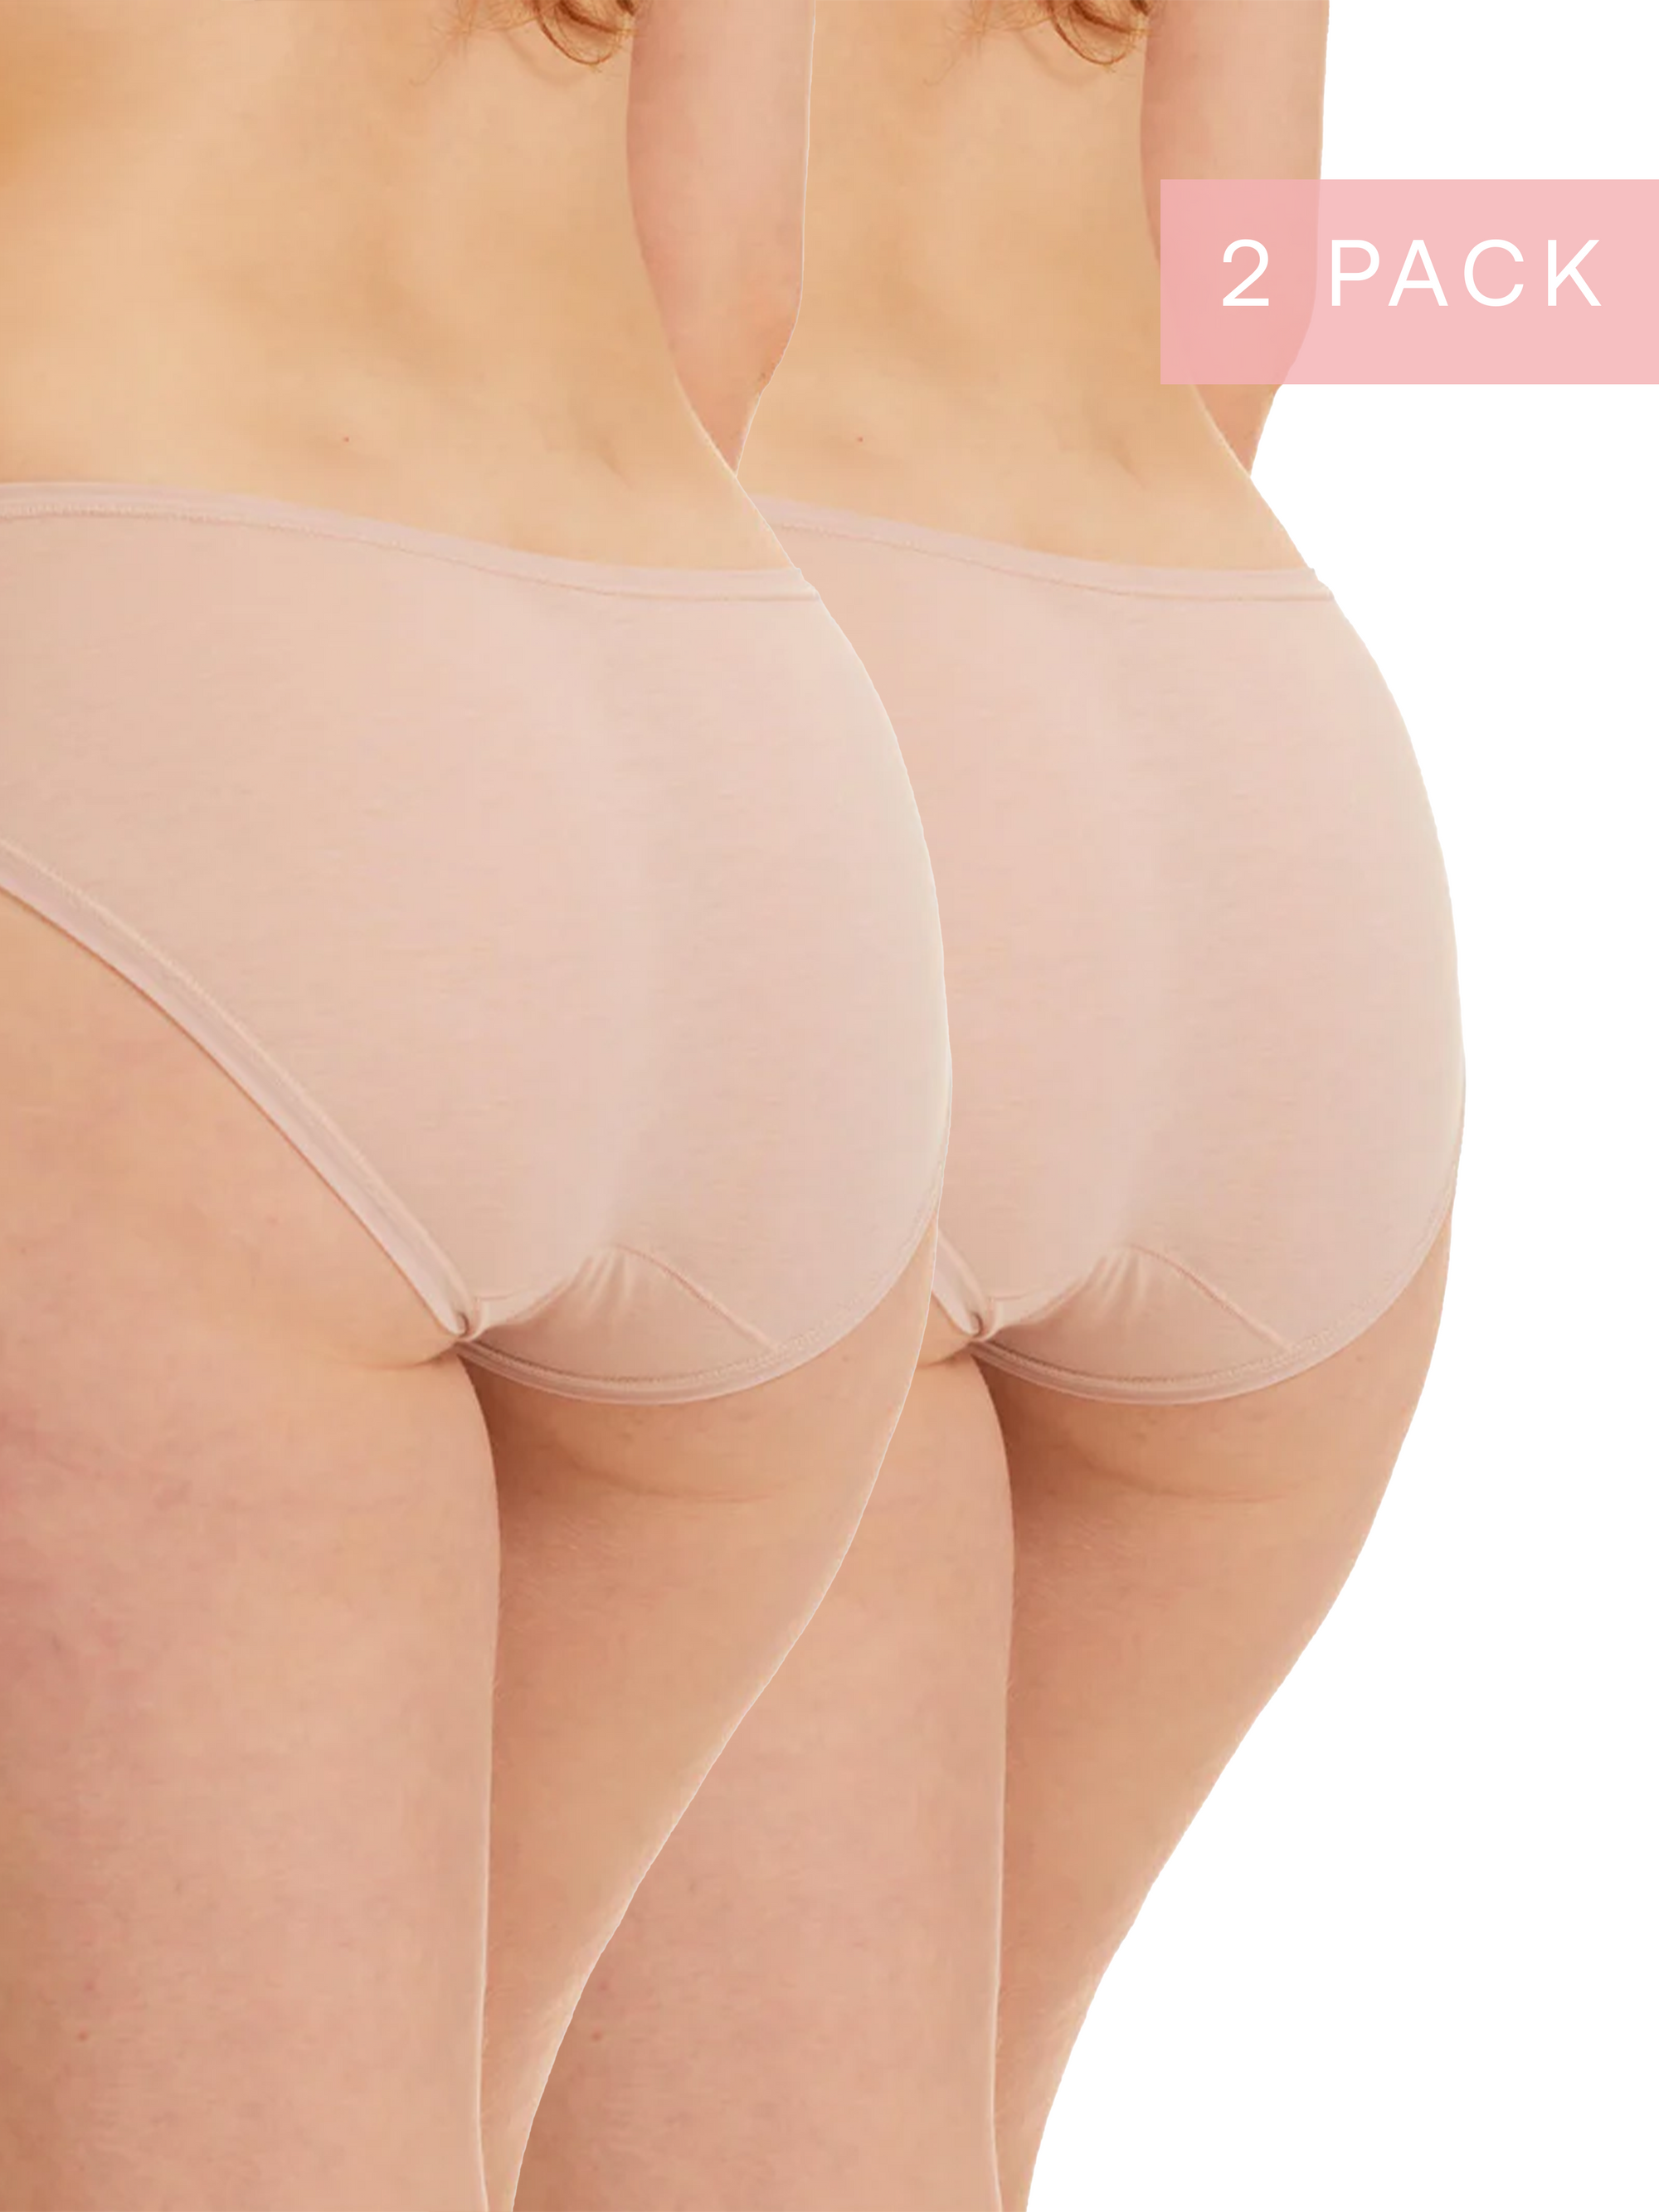 2 Pack Pure Cotton Bikini in Honey Beige - Kayser Lingerie